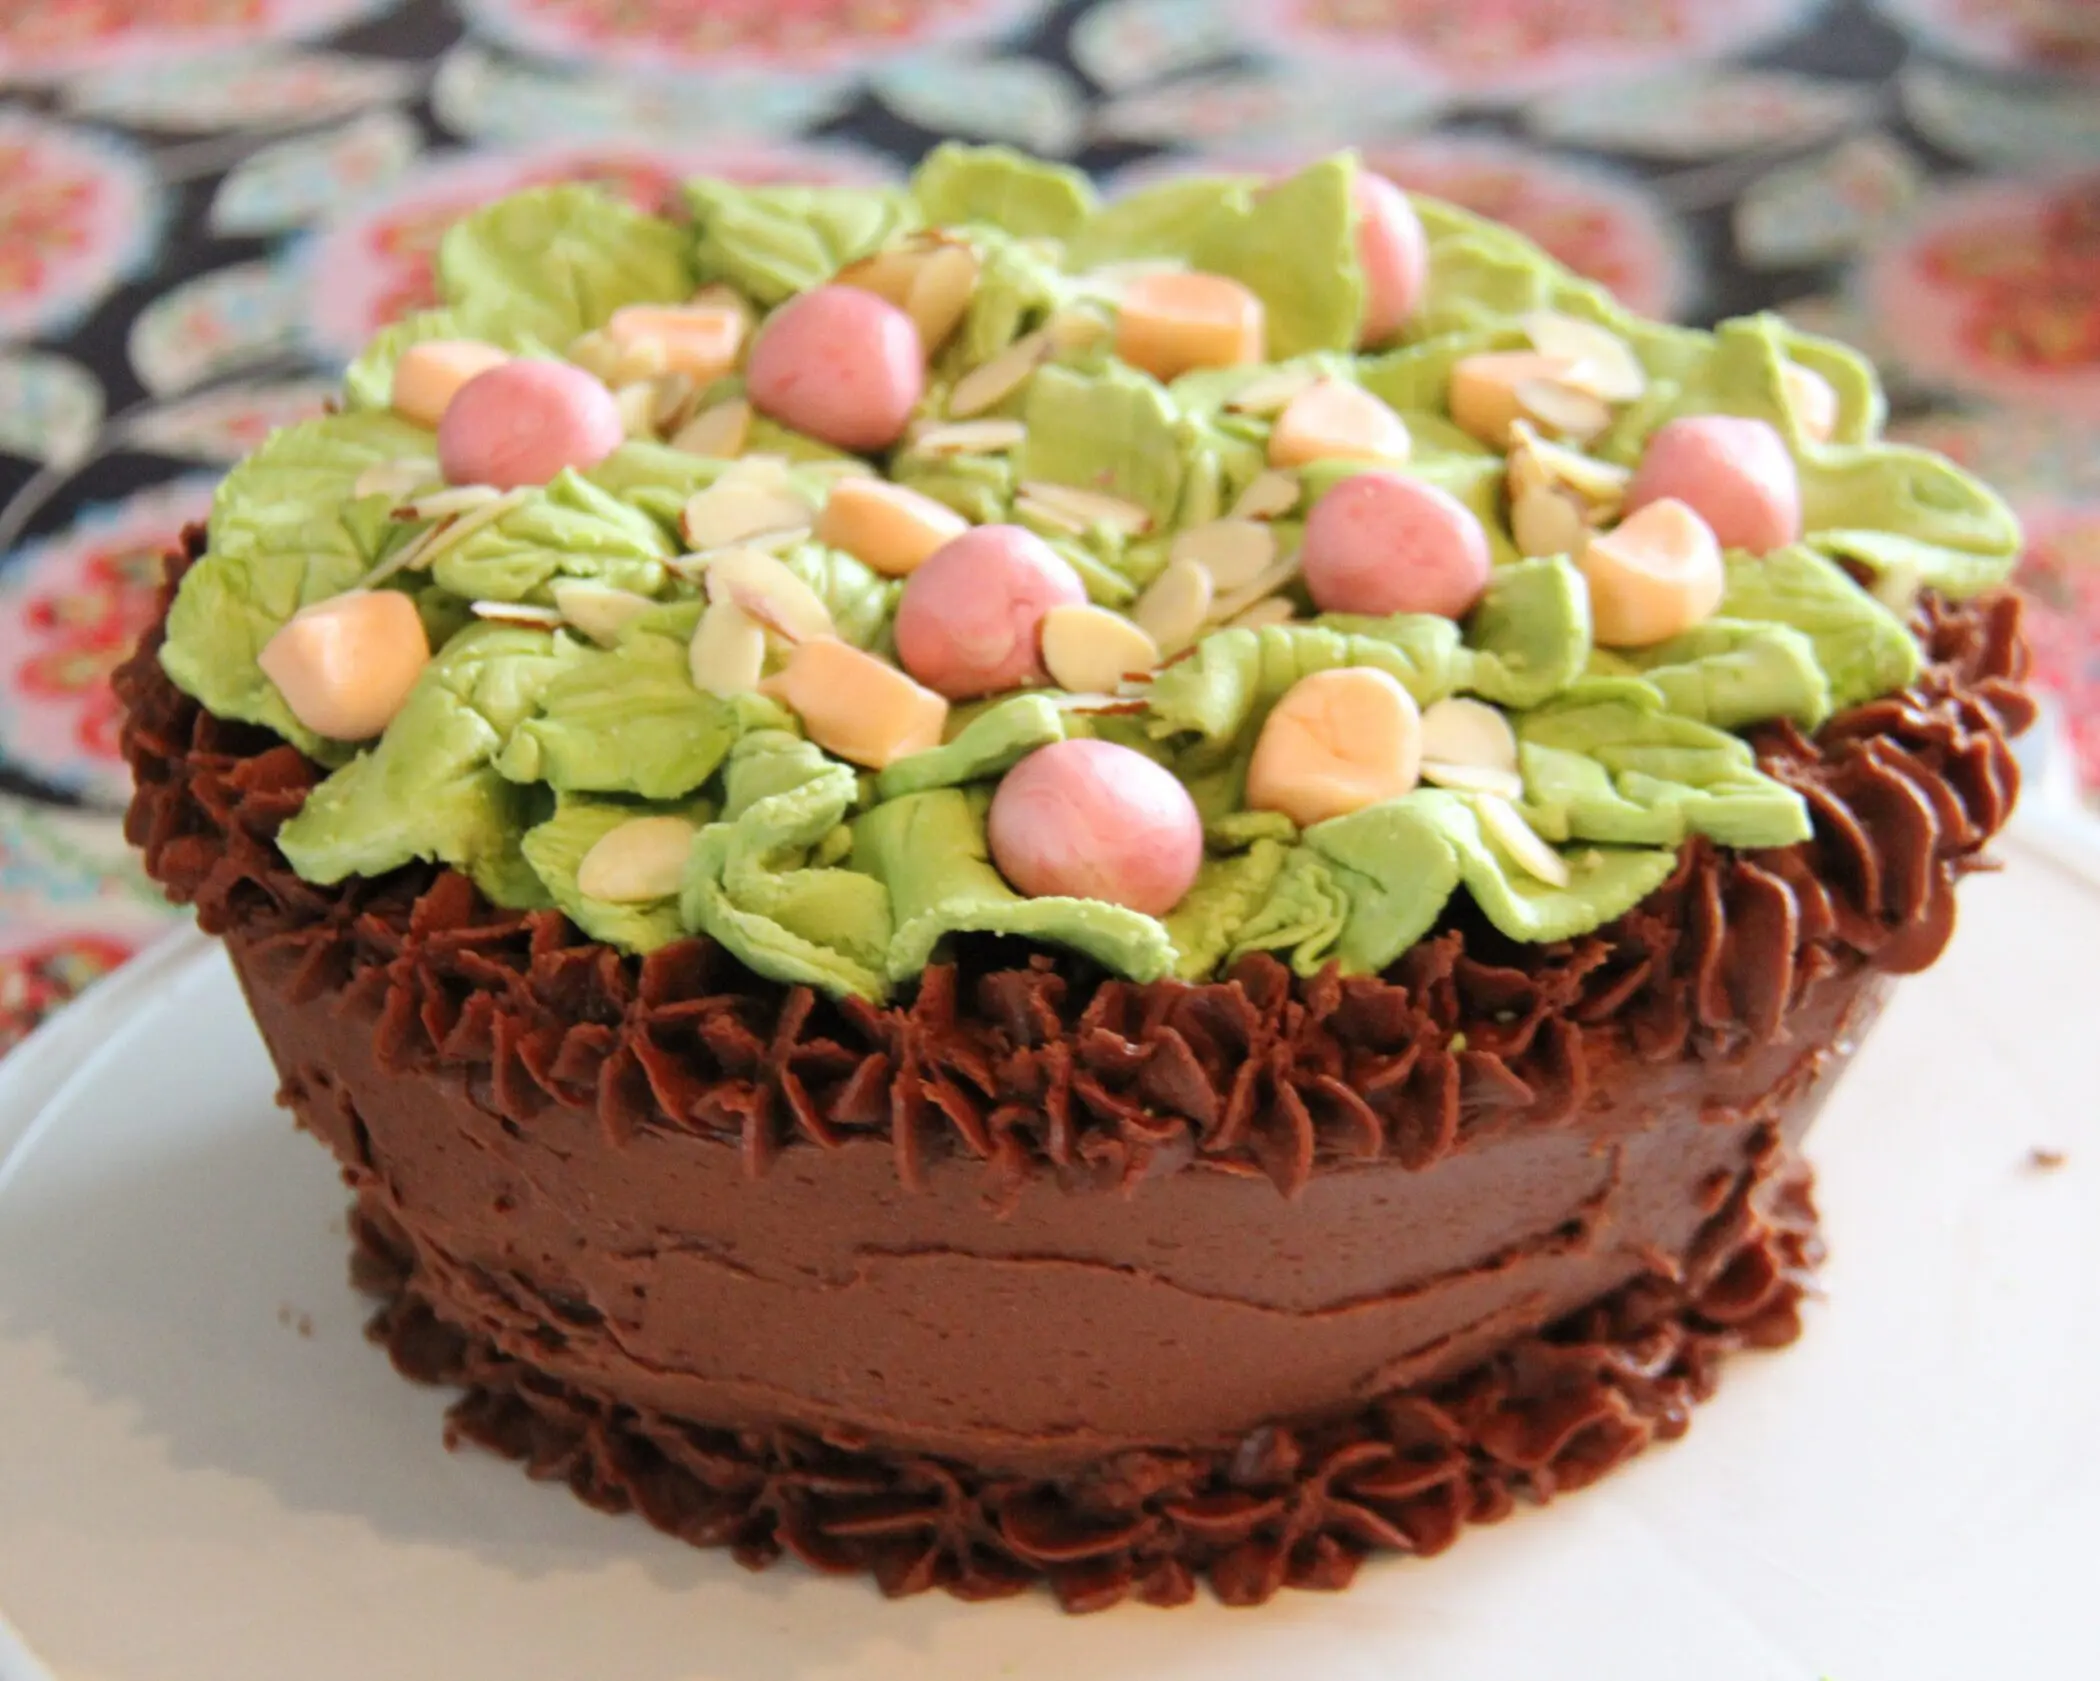 Chris’ Birthday Cake + Marshmallow Fondant Recipe